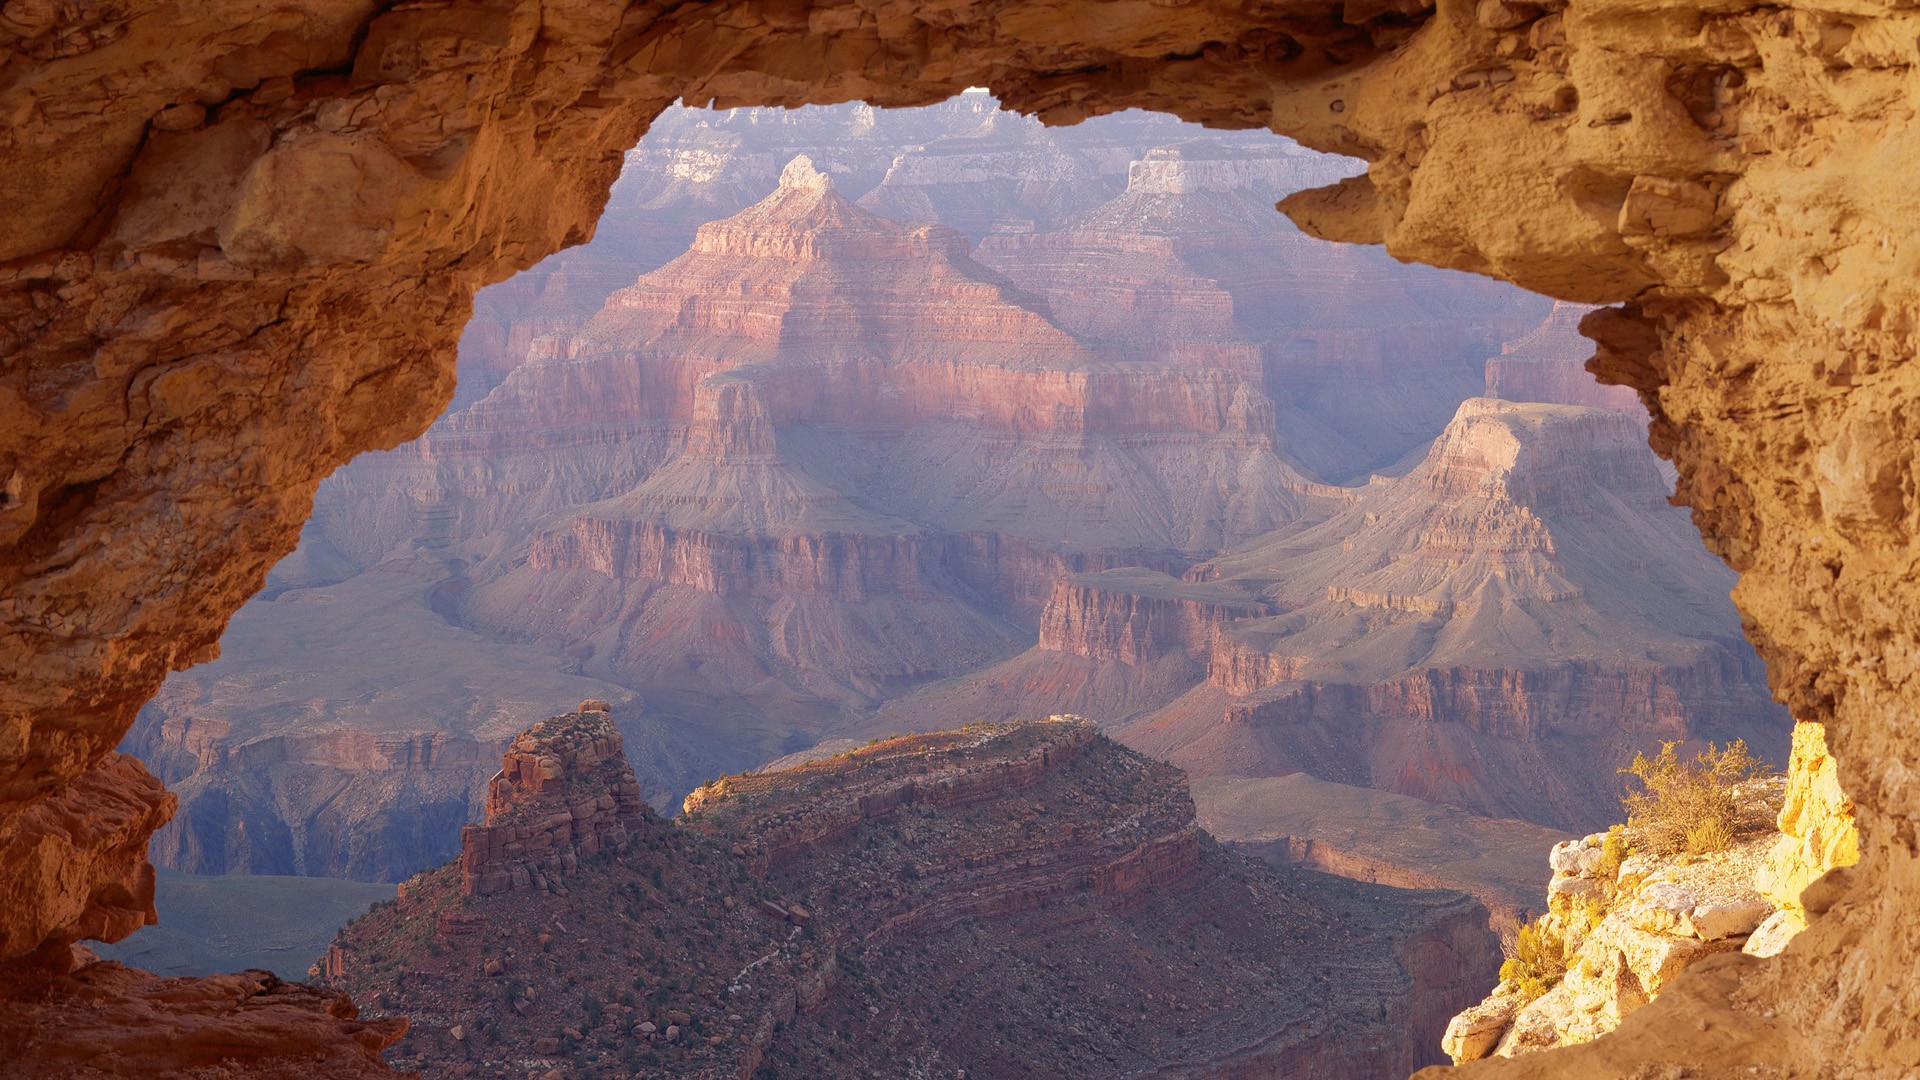 landscapes, nature, Arizona, Grand Canyon, arch, National Park, rock formations - desktop wallpaper